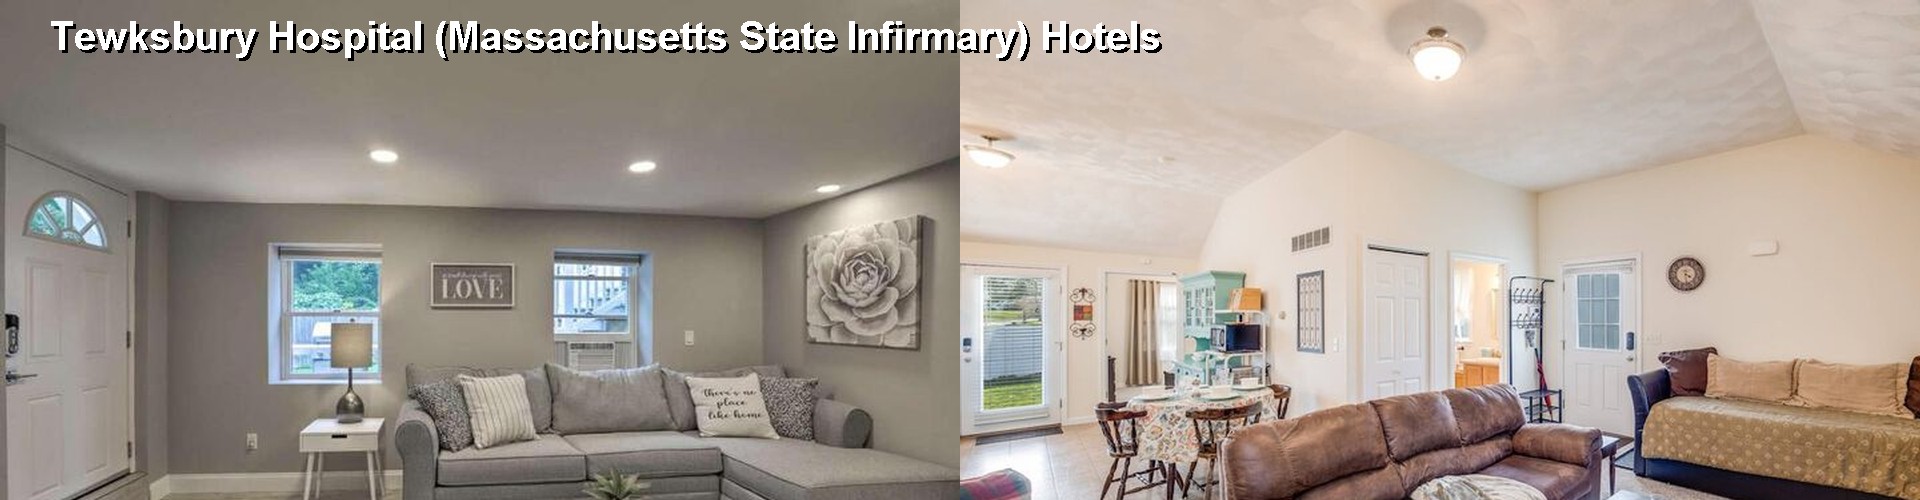 5 Best Hotels near Tewksbury Hospital (Massachusetts State Infirmary)